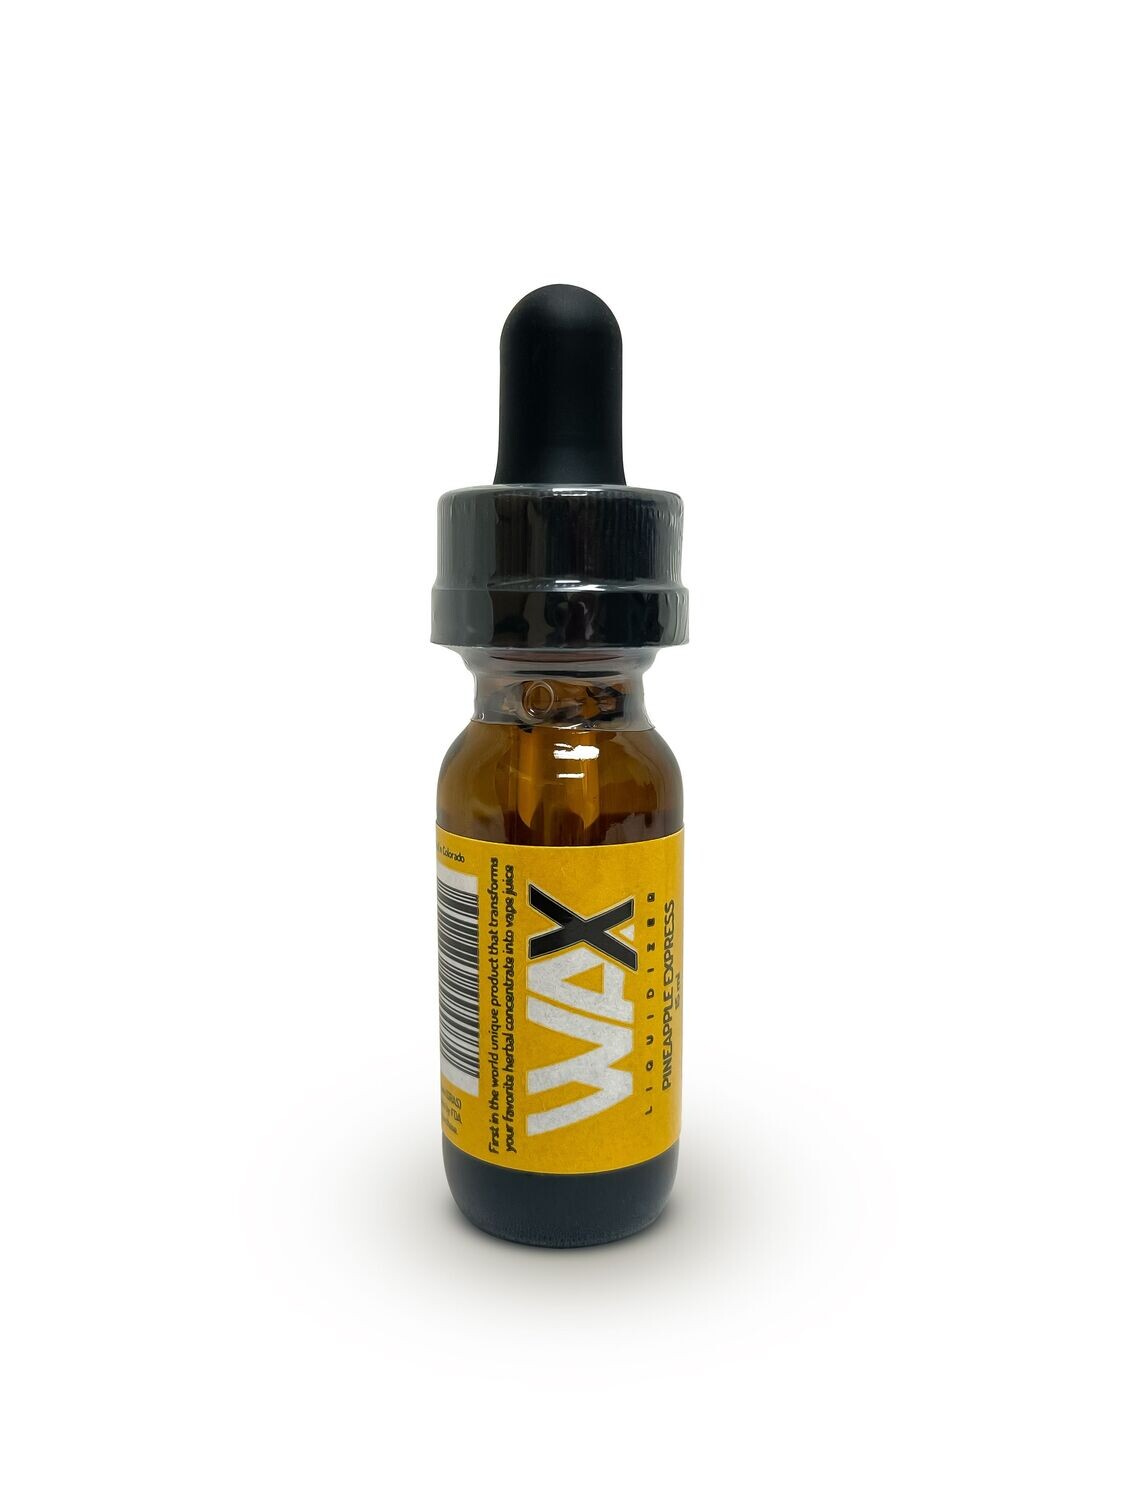 Wax Liquidizer - Pineapple Express